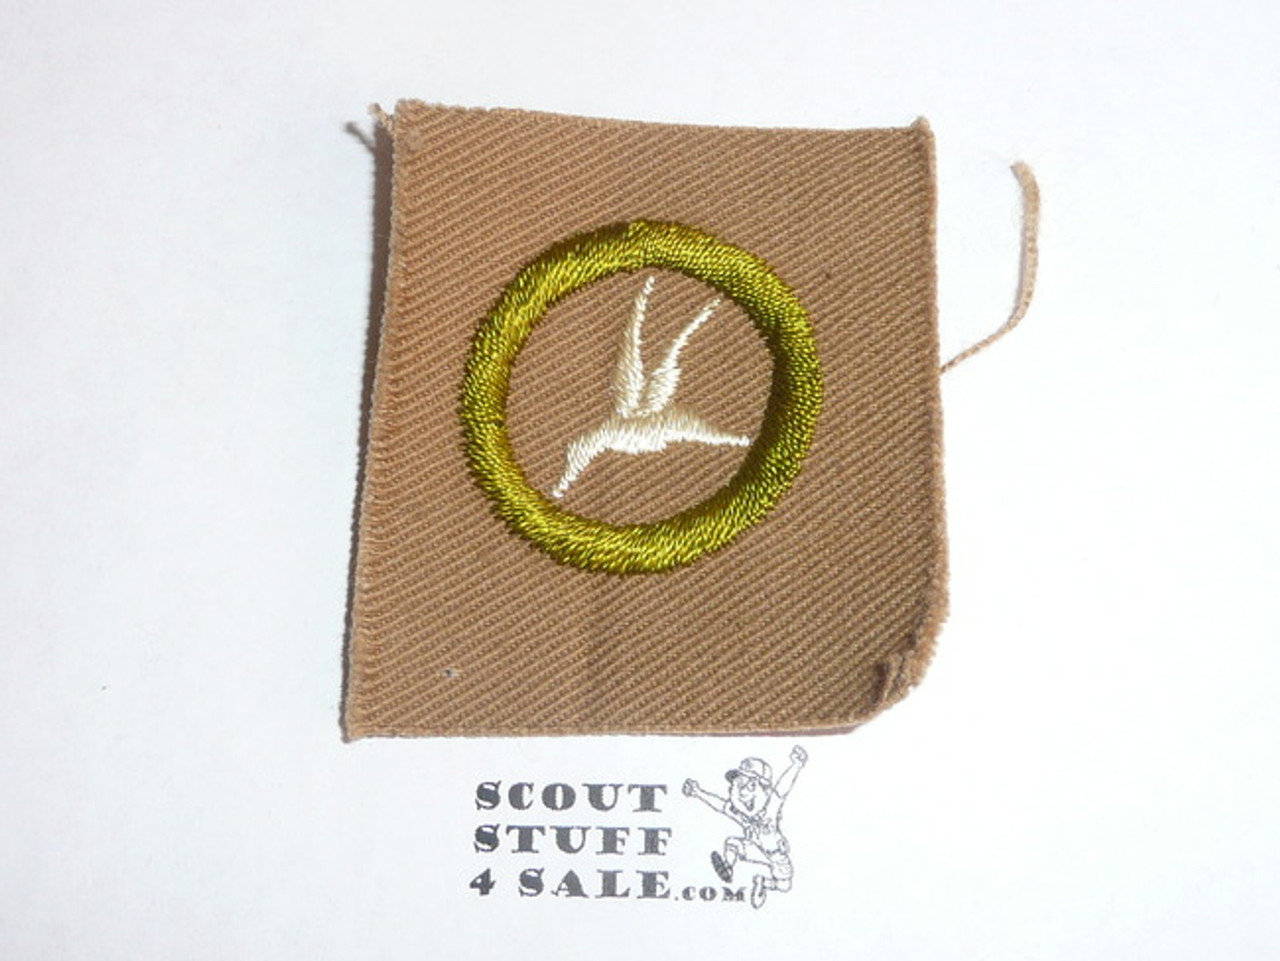 Bird Study - Type A - Square Tan Merit Badge (1911-1933), TEENS variety, striped back